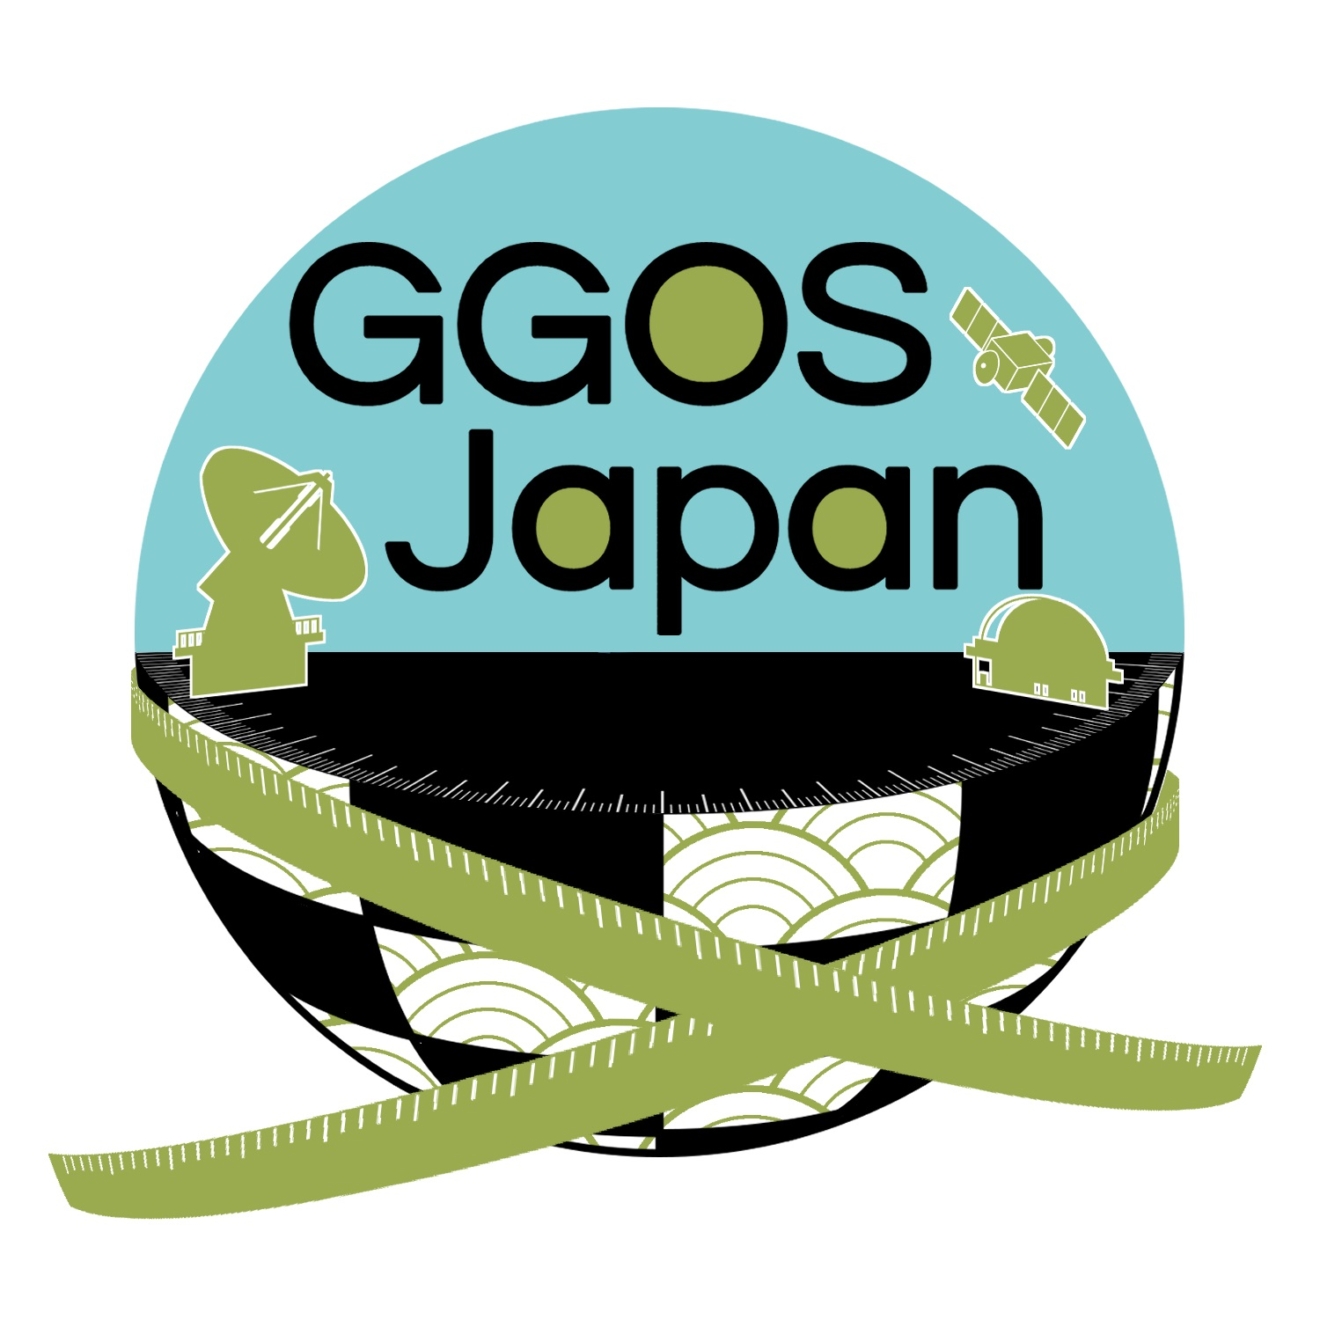 GGOS Japan new Logo and Film